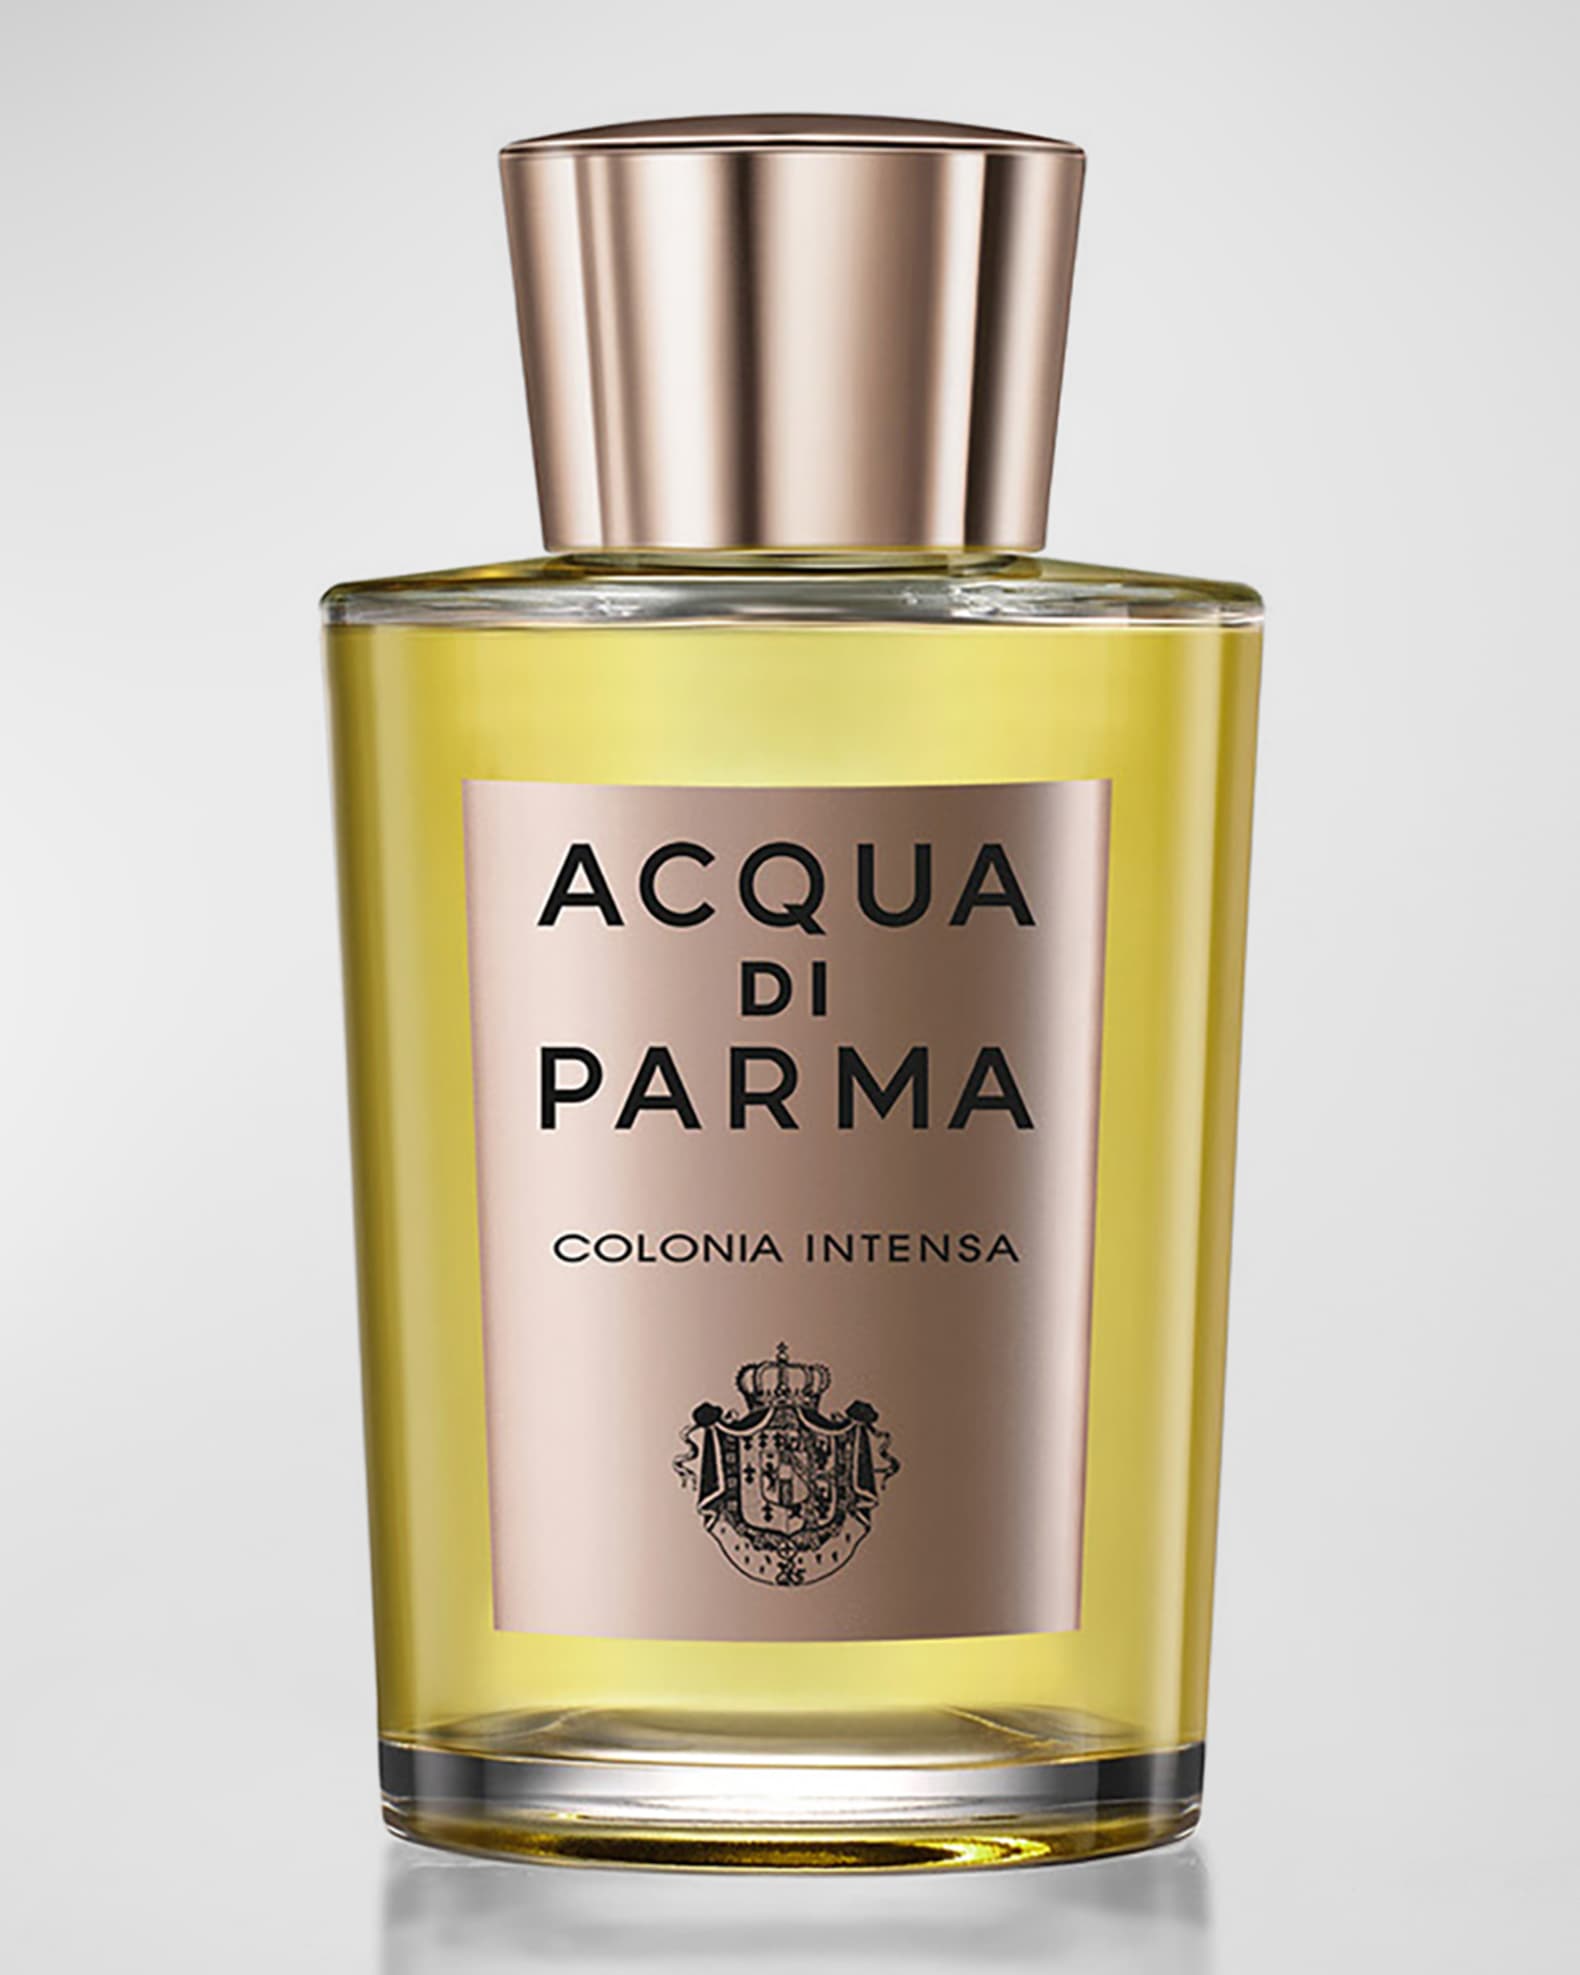 Acqua di Parma Colonia Intensa de Marcus Cologne, 6.0 oz. Neiman | Eau